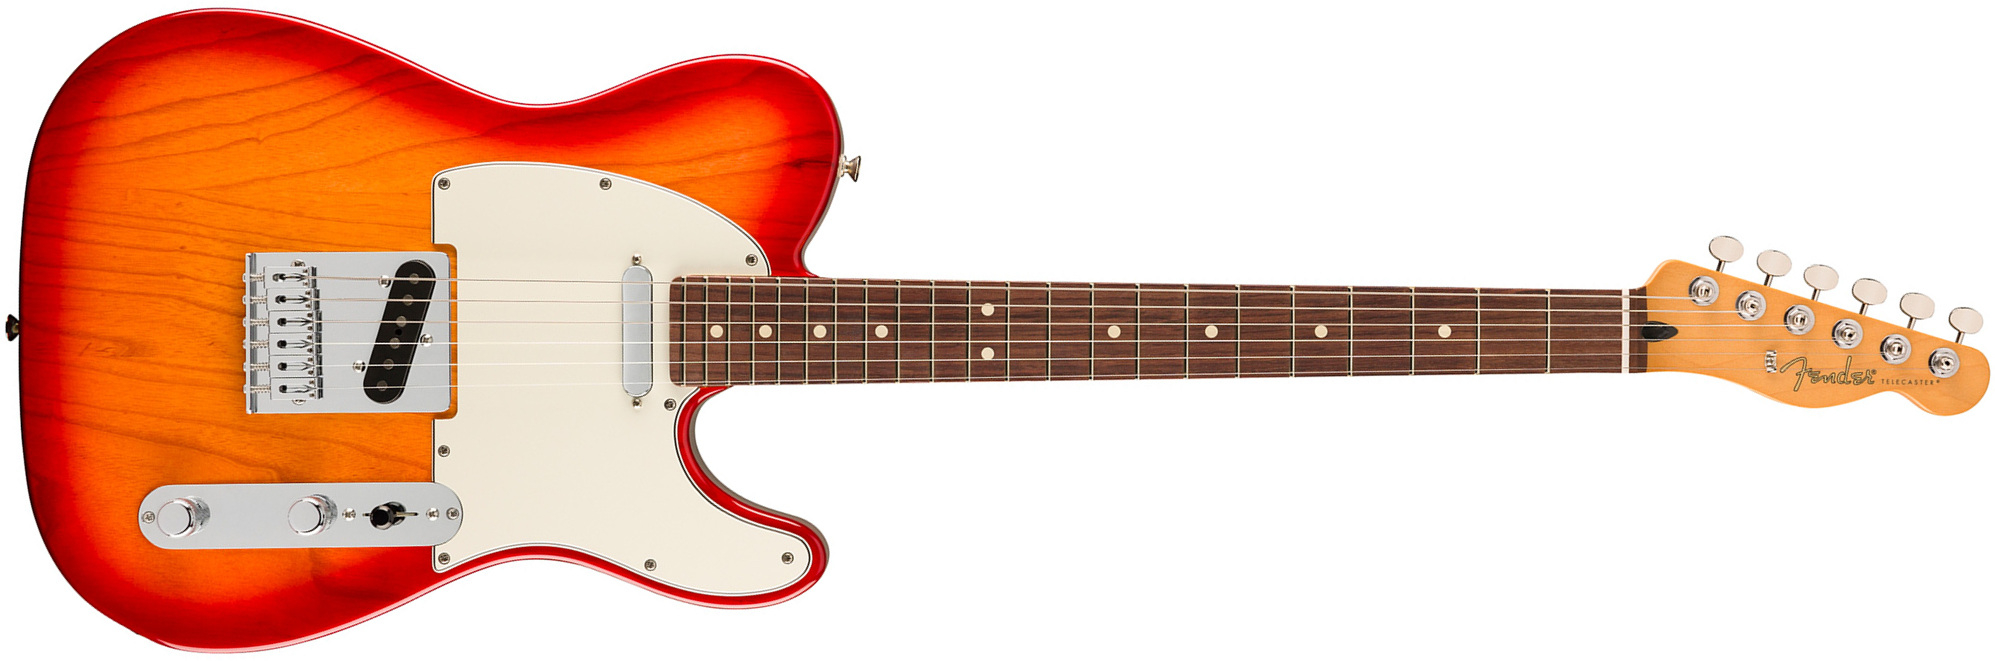 Fender Tele Player Ii Mex Frene 2s Ht Rw - Aged Cherry Burst - Televorm elektrische gitaar - Main picture